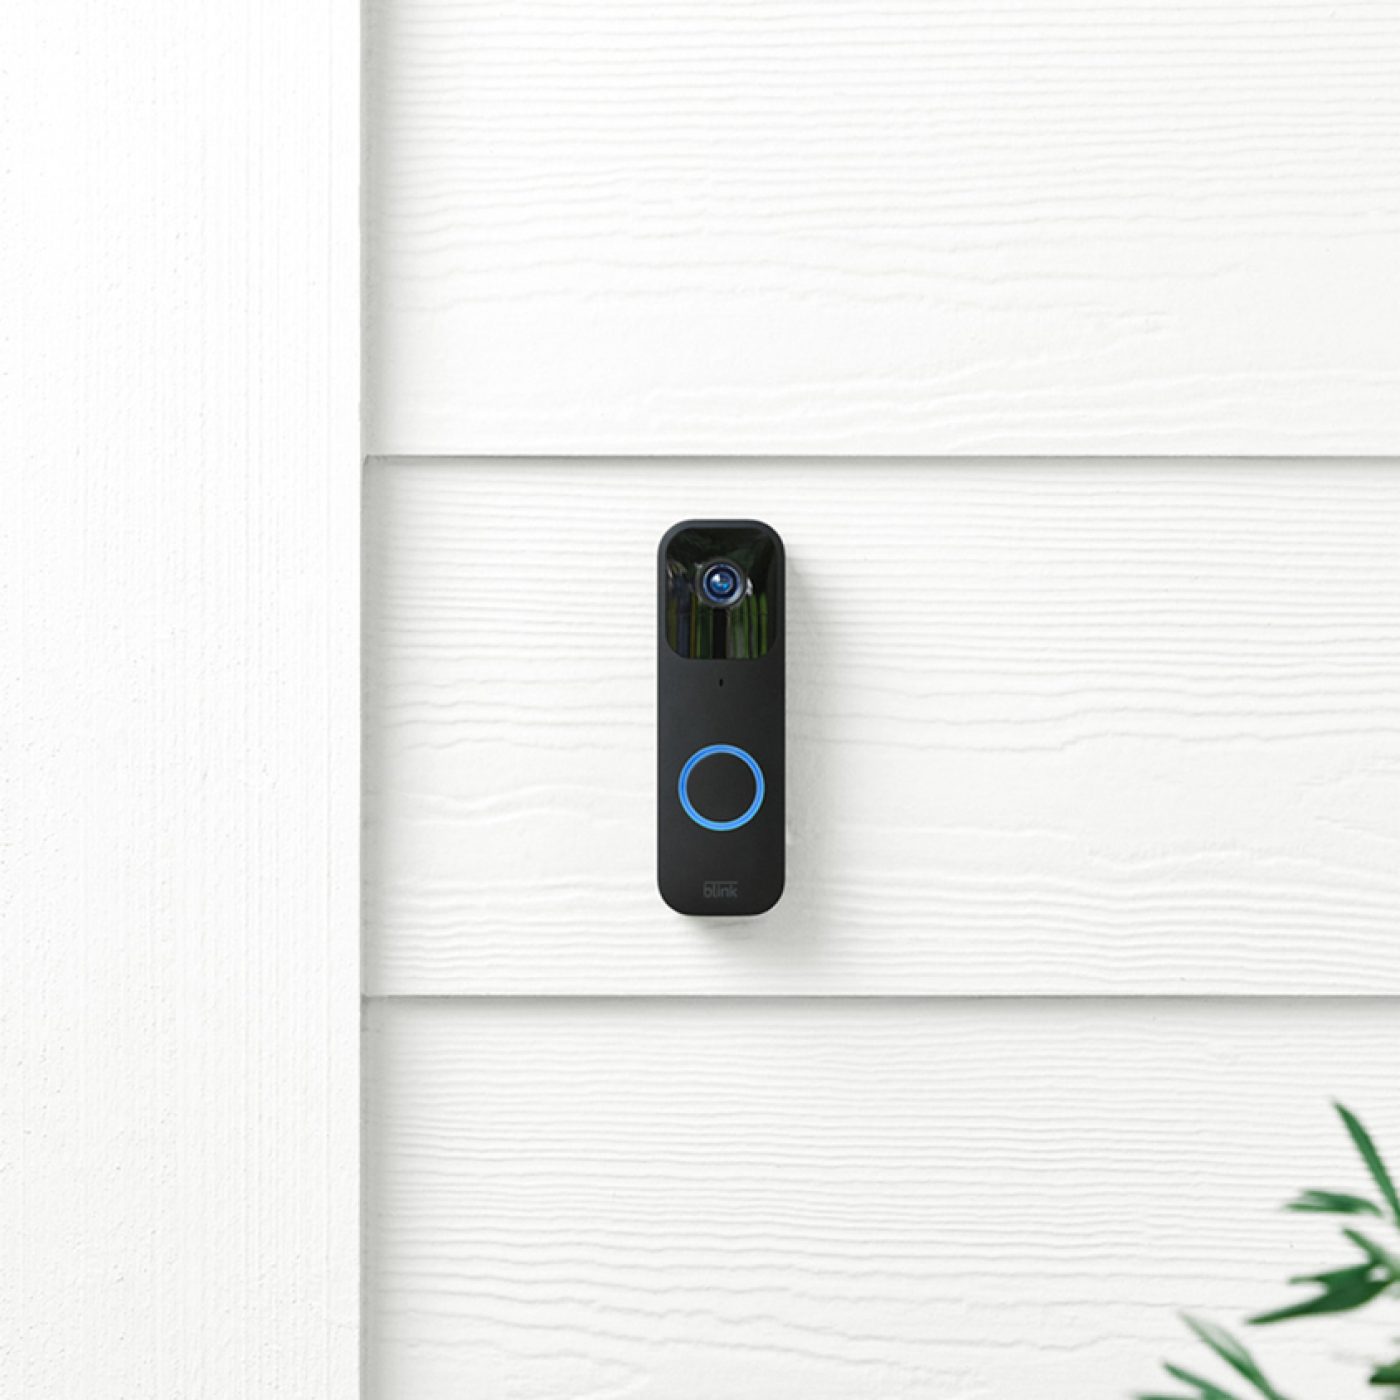 Blink Video Doorbell Full Review & Setup Guide - Should you Buy? 